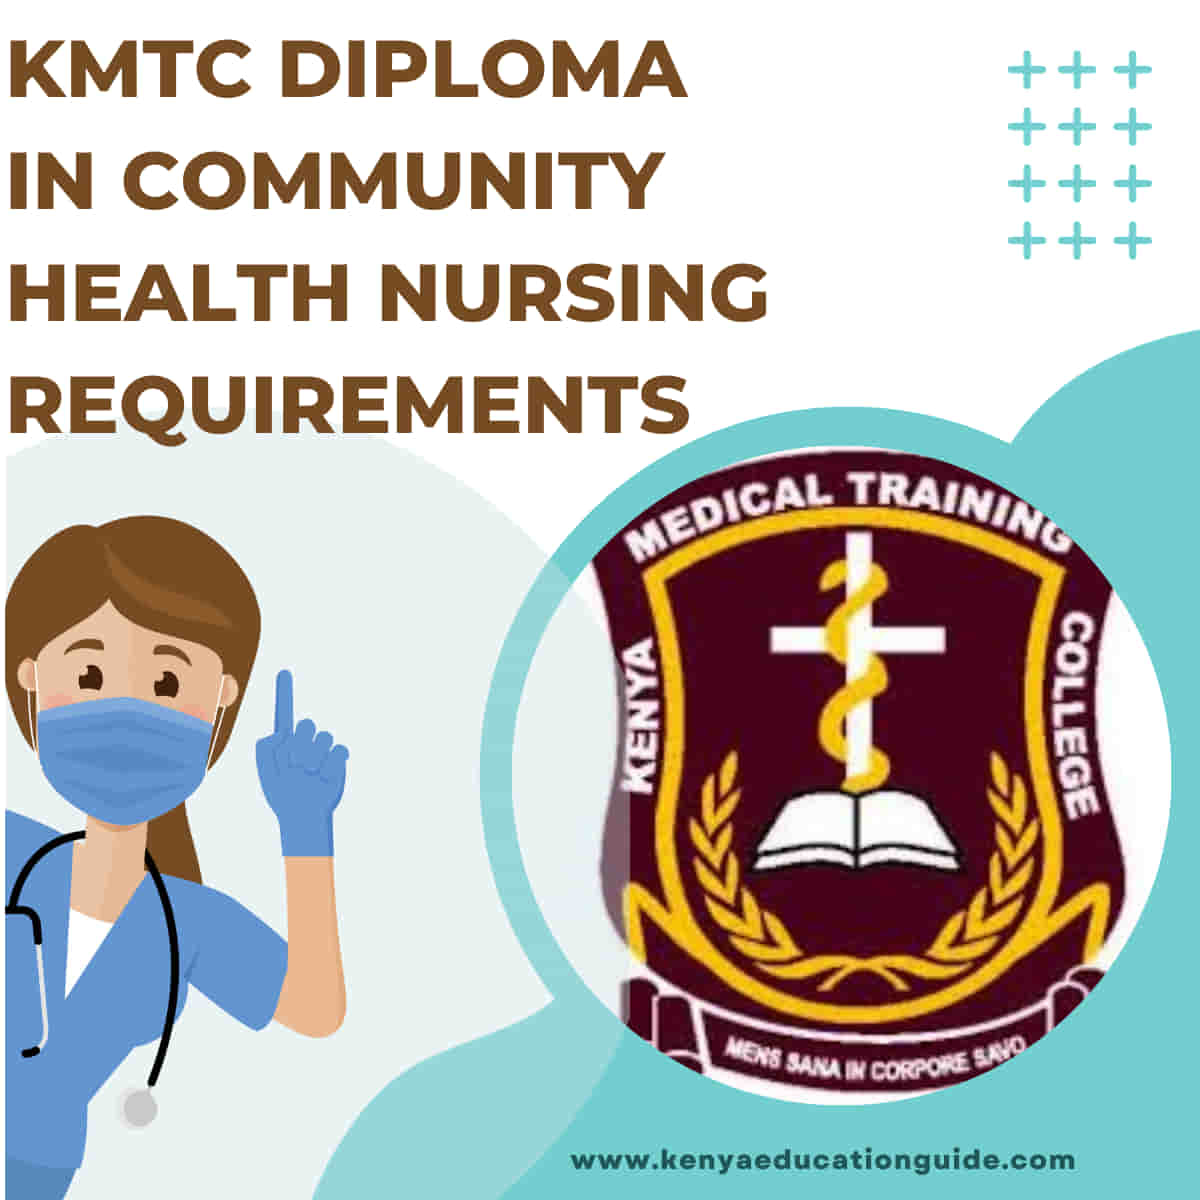 KMTC diploma in community health nursing requirements